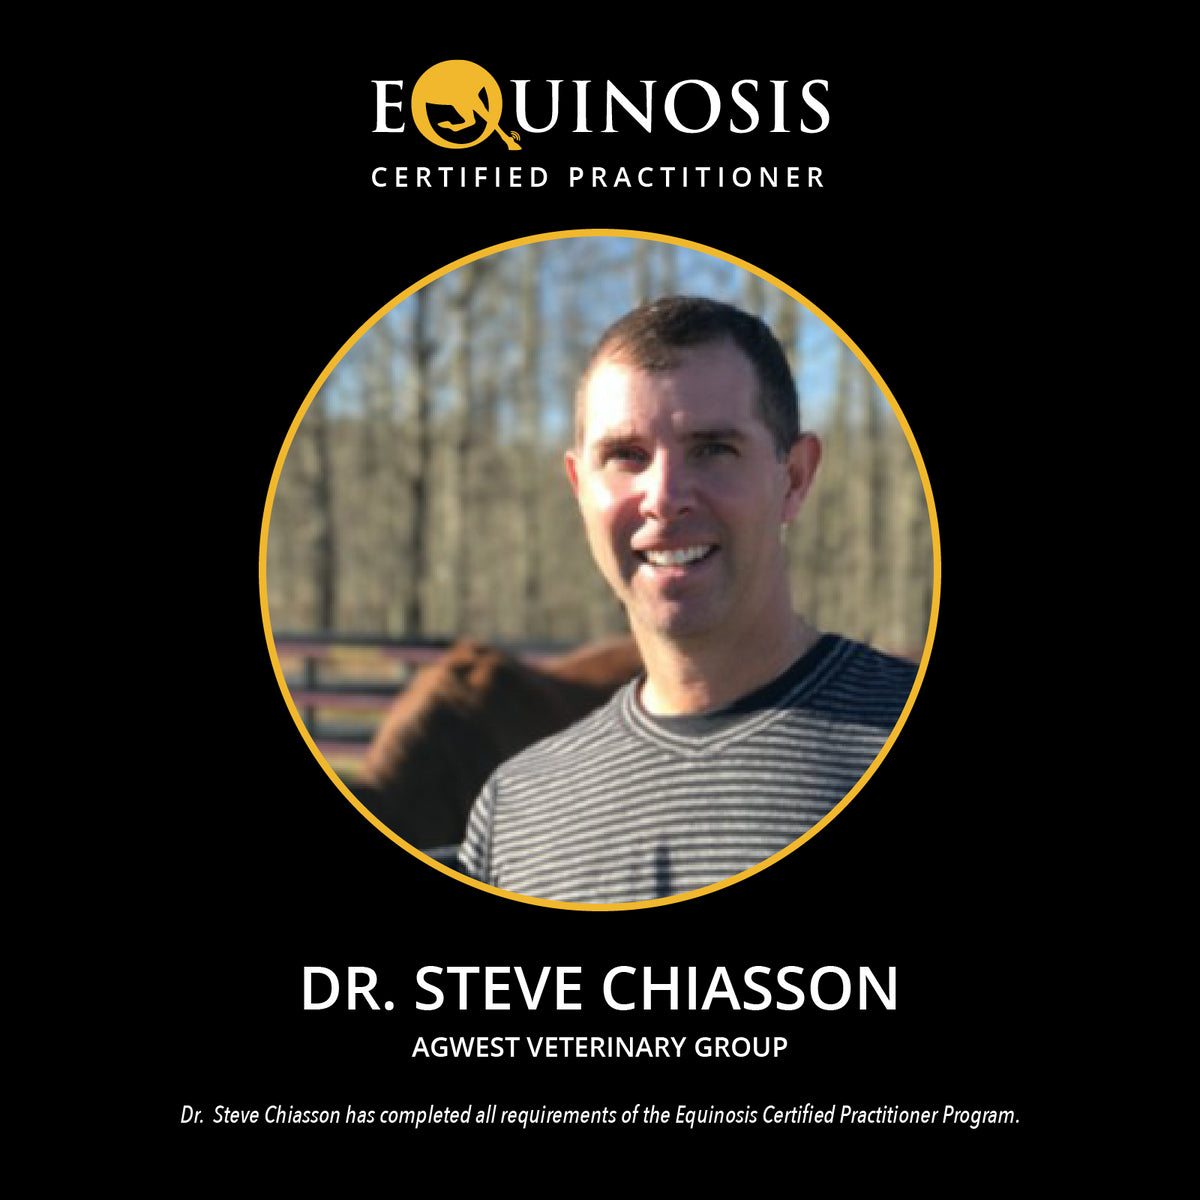 Steve Chiasson, DVM, cVMA of Agwest Veterinary Group, Abbotsford, BC, Canada